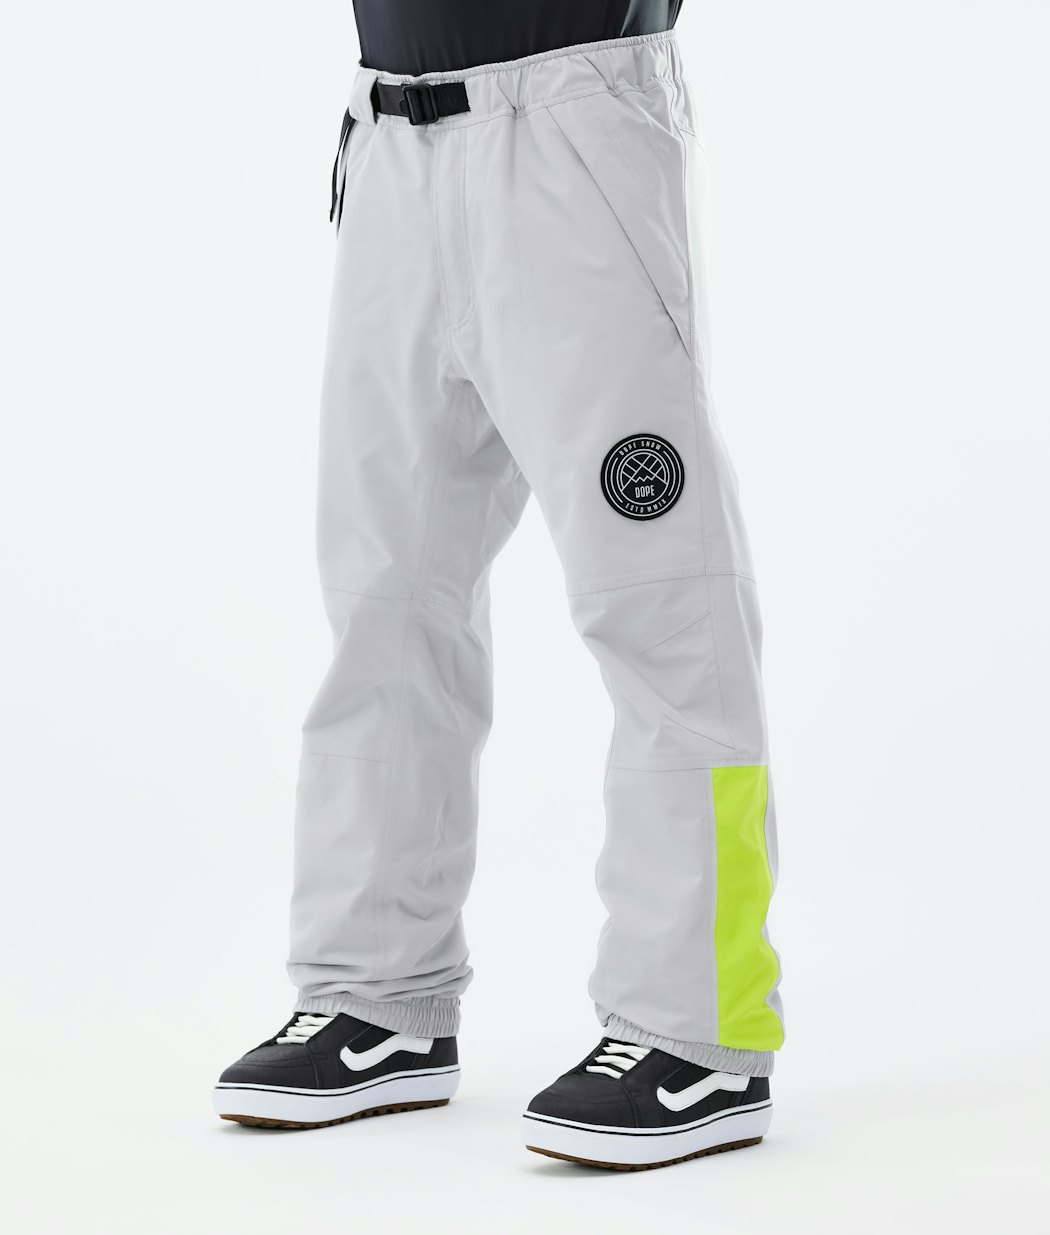 Dope Blizzard LE Men's Snowboard Pants Limited Edition Stripe Light Grey